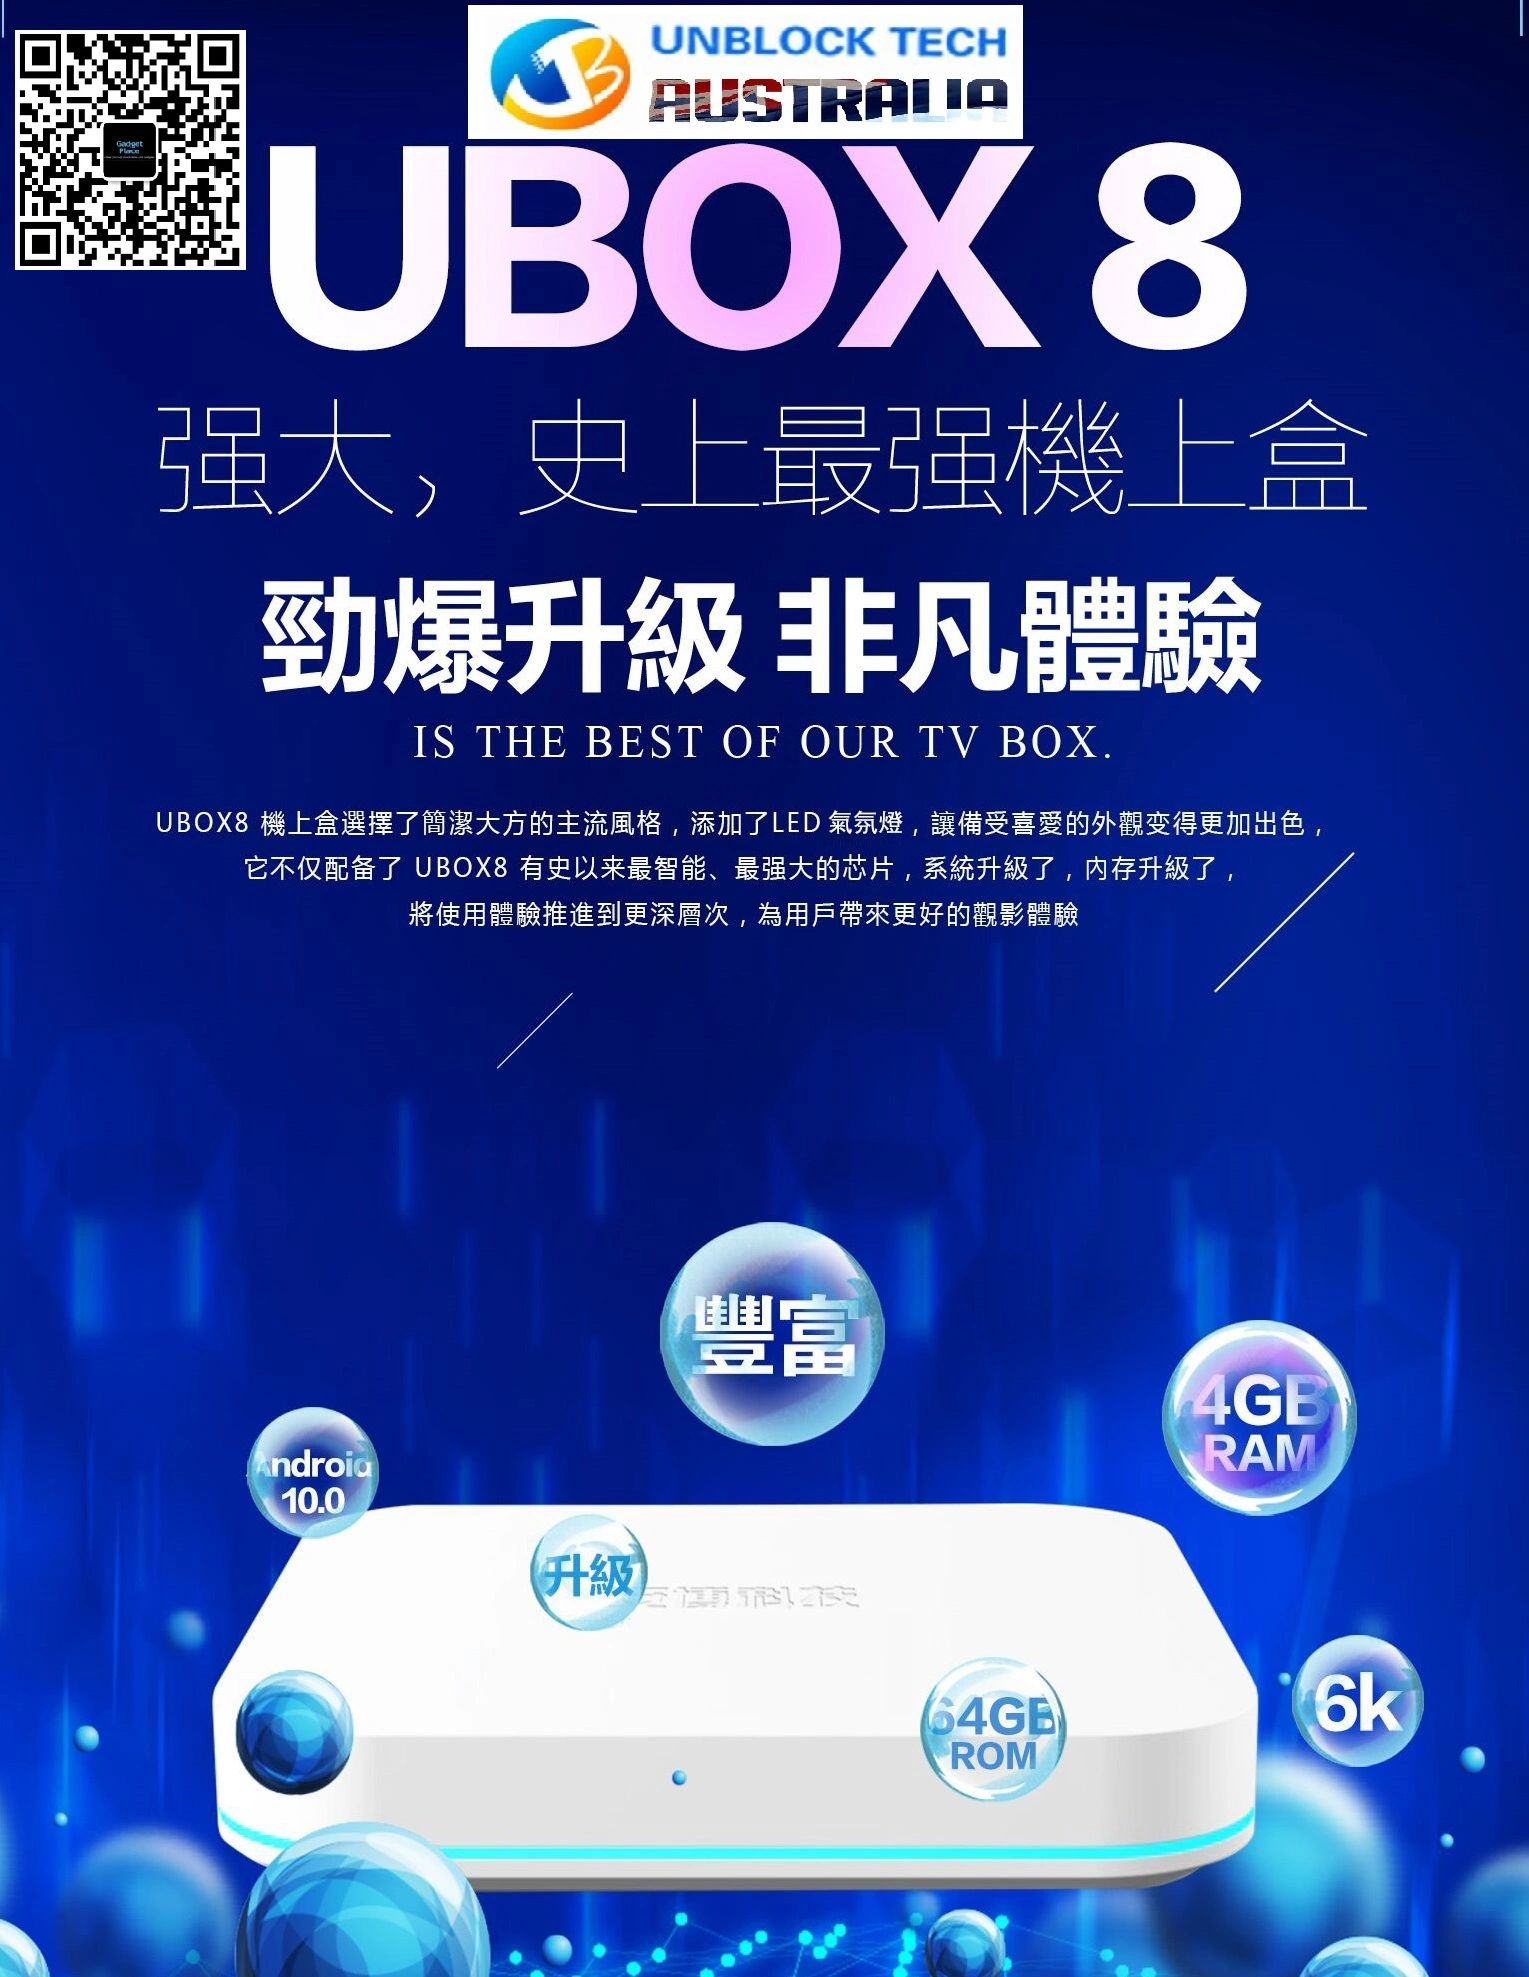 Unblock Tech Ubox 8